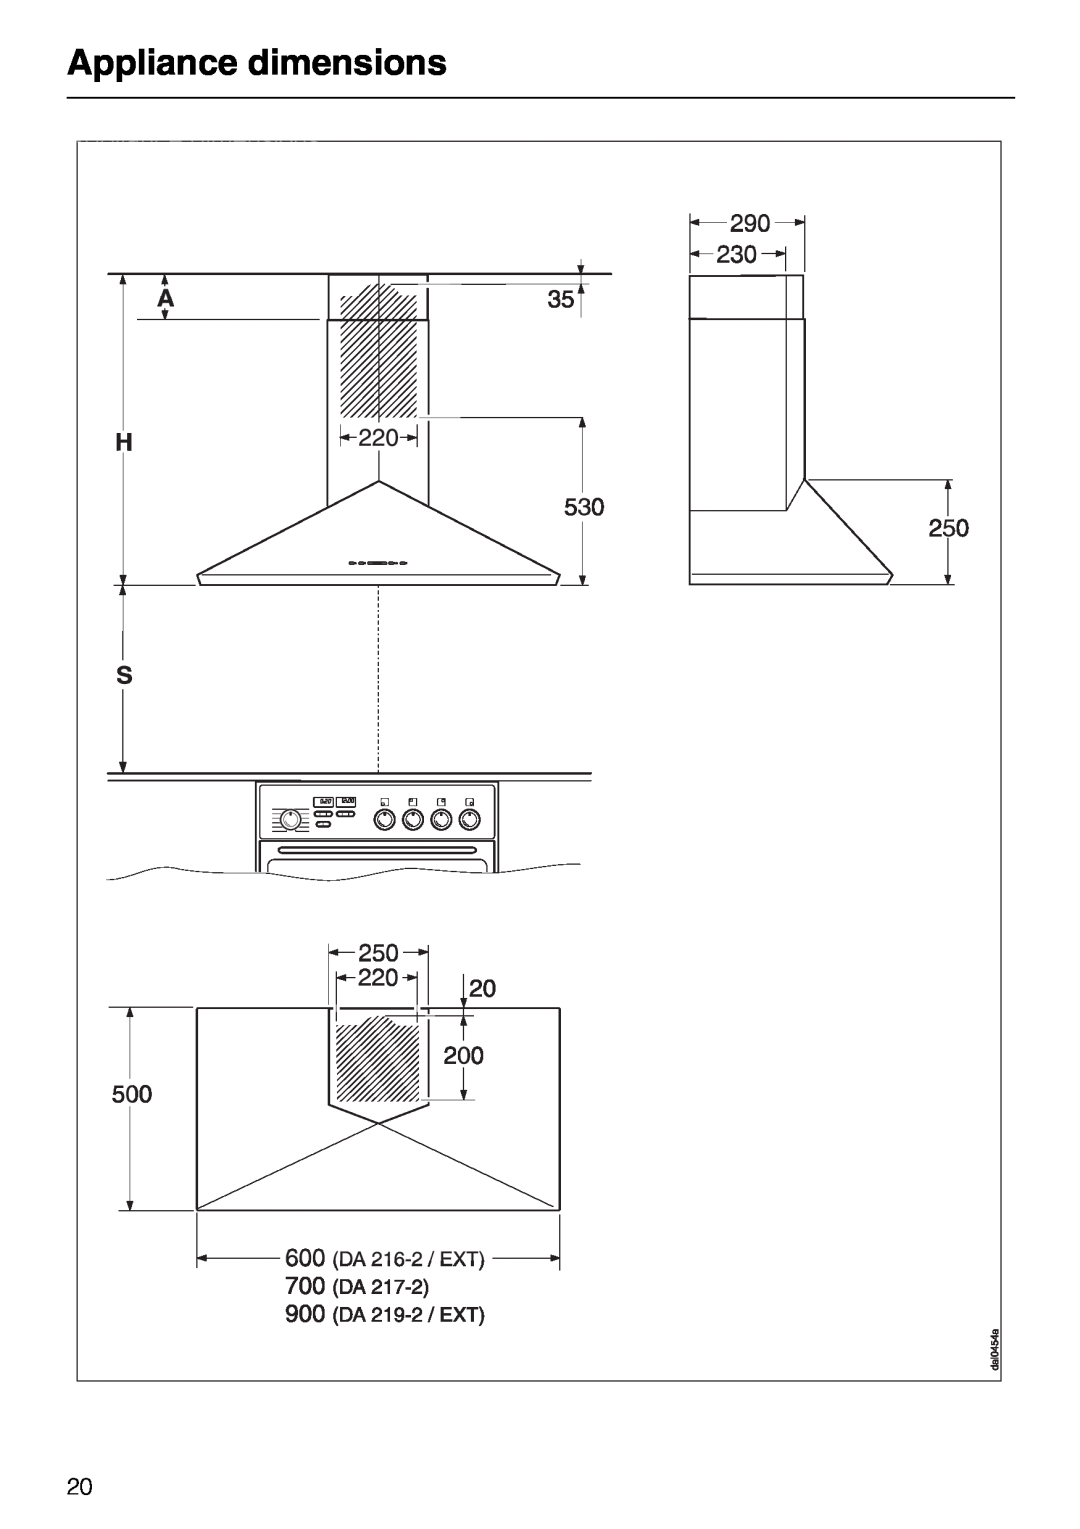 Miele DA 216-2 EXT, DA 219-2 EXT, DA 217-2 installation instructions Appliance dimensions 